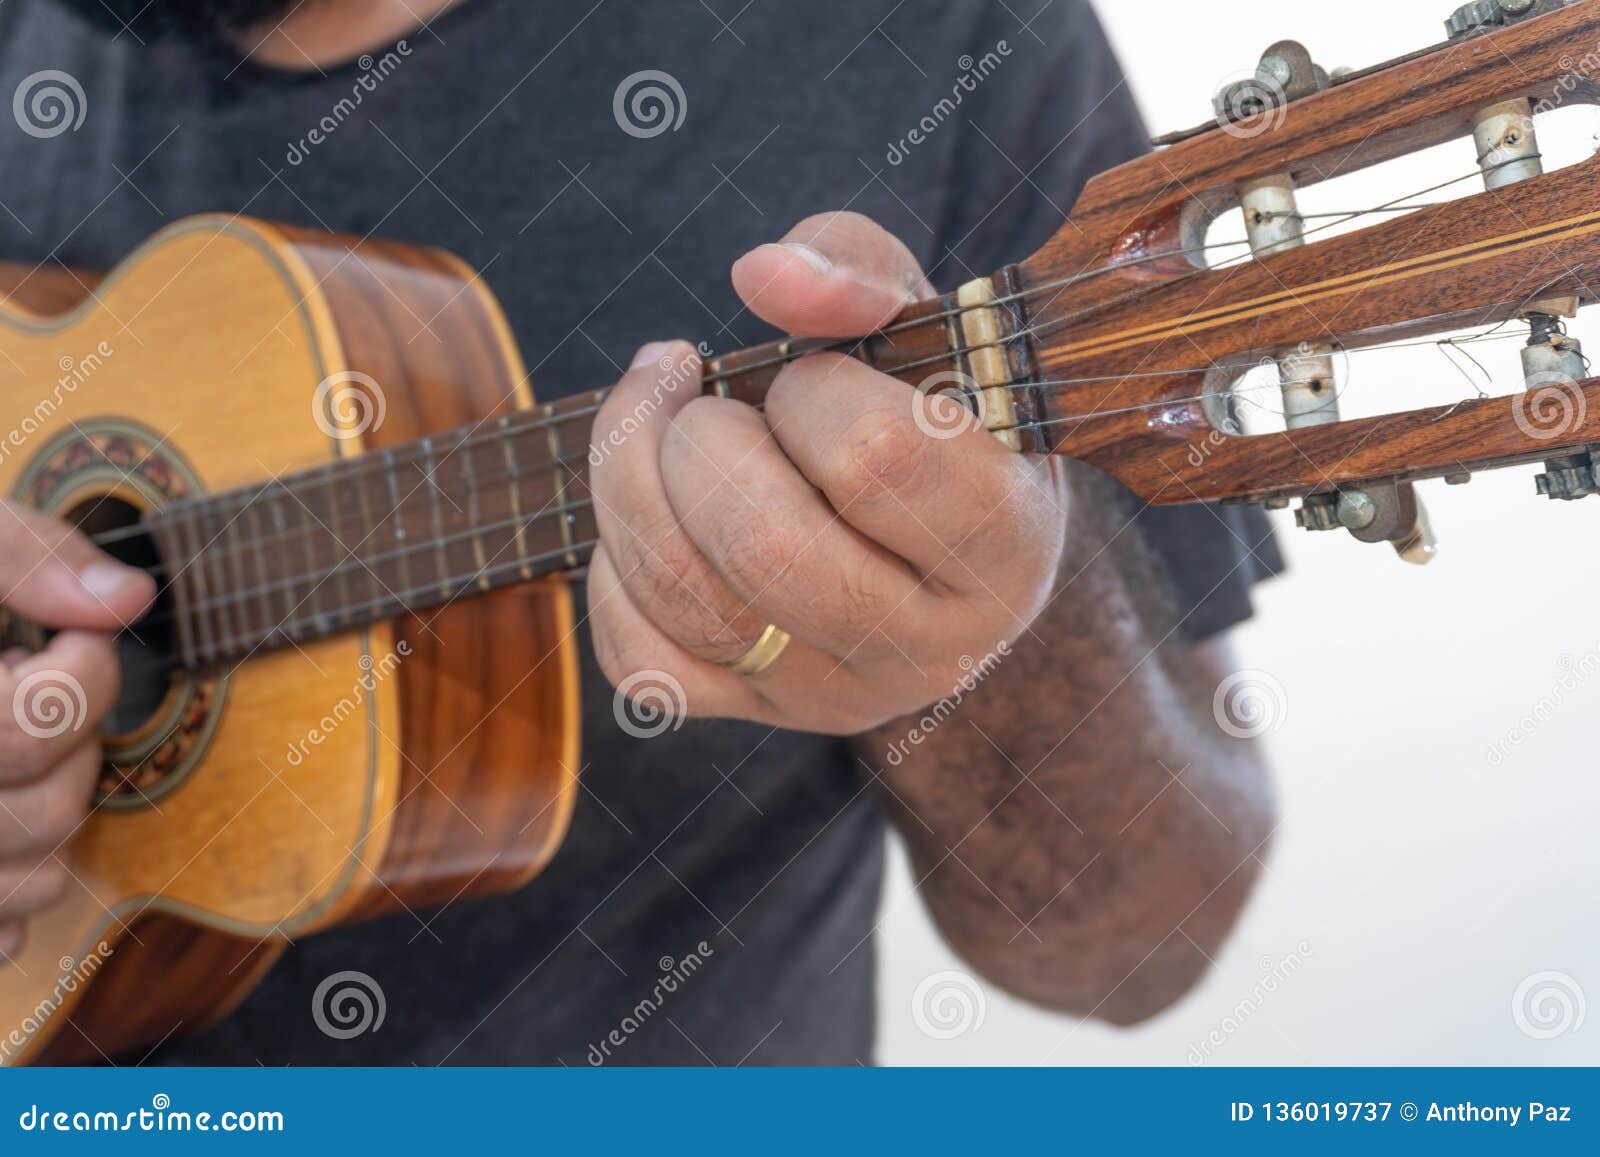 young man playing ukulele with shirt and black pants